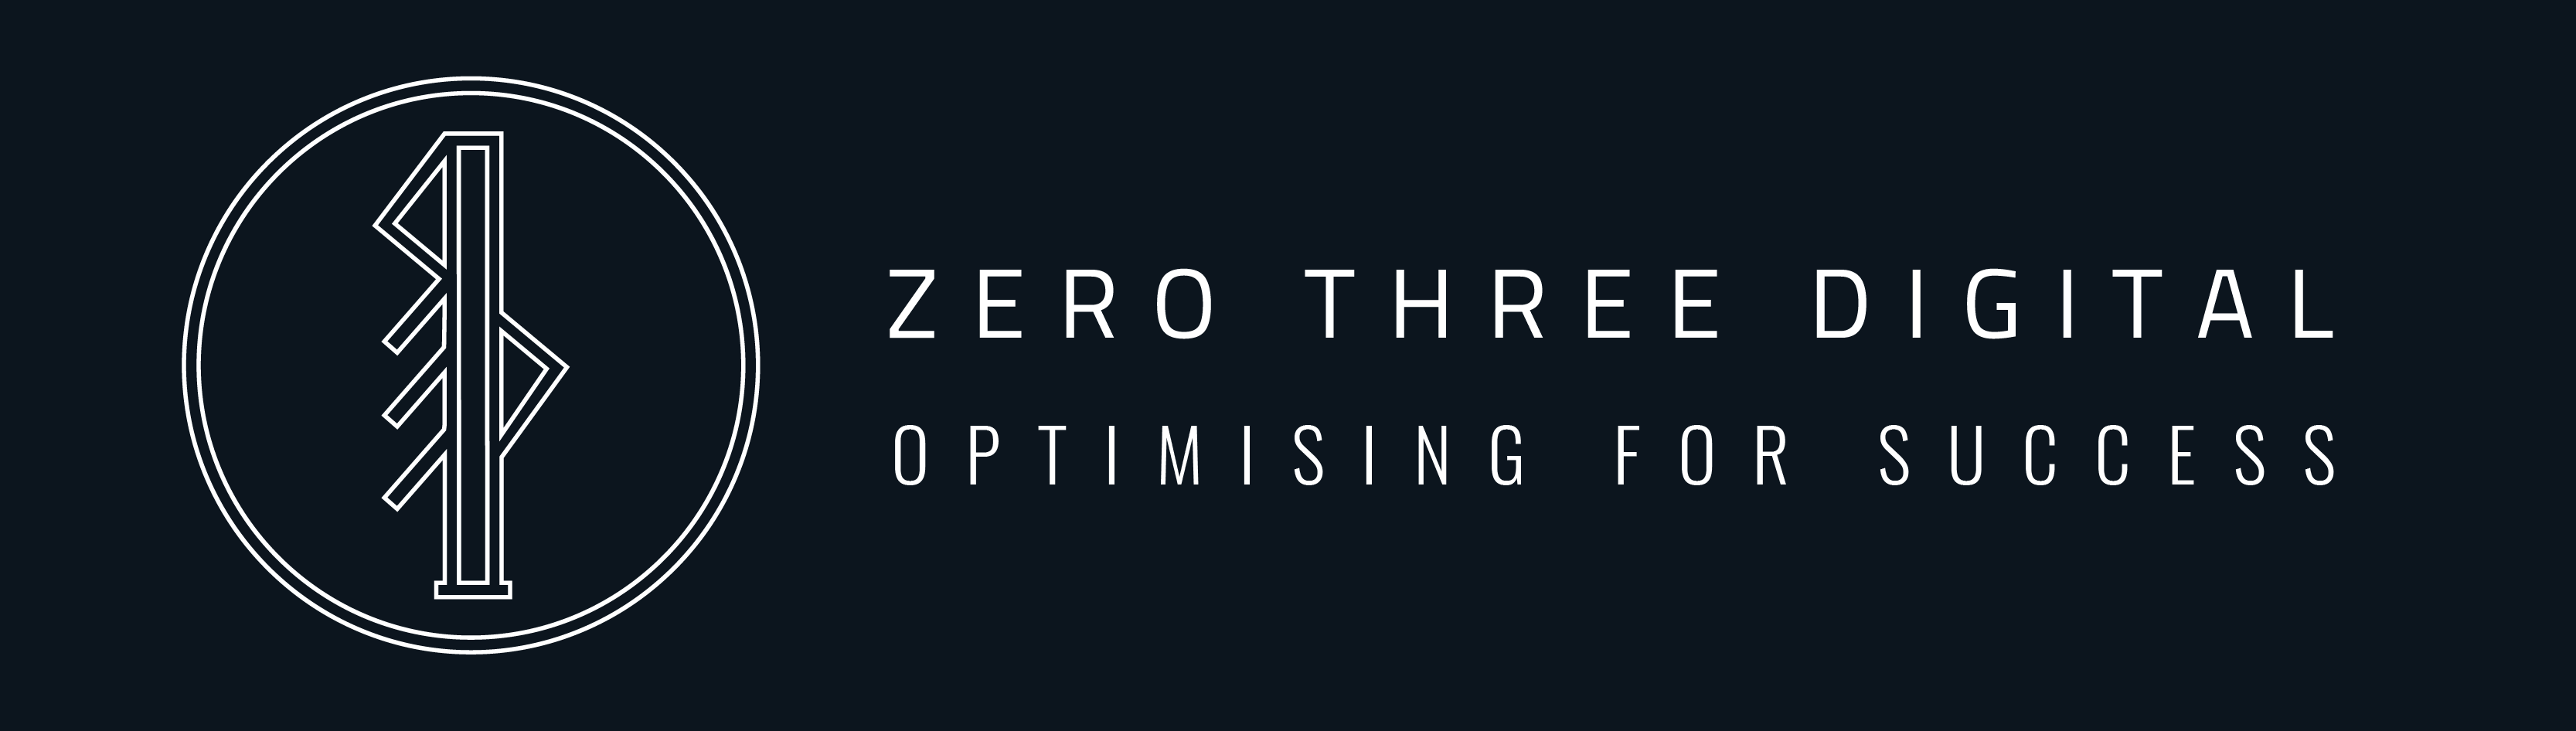 zero three digital marketing agency